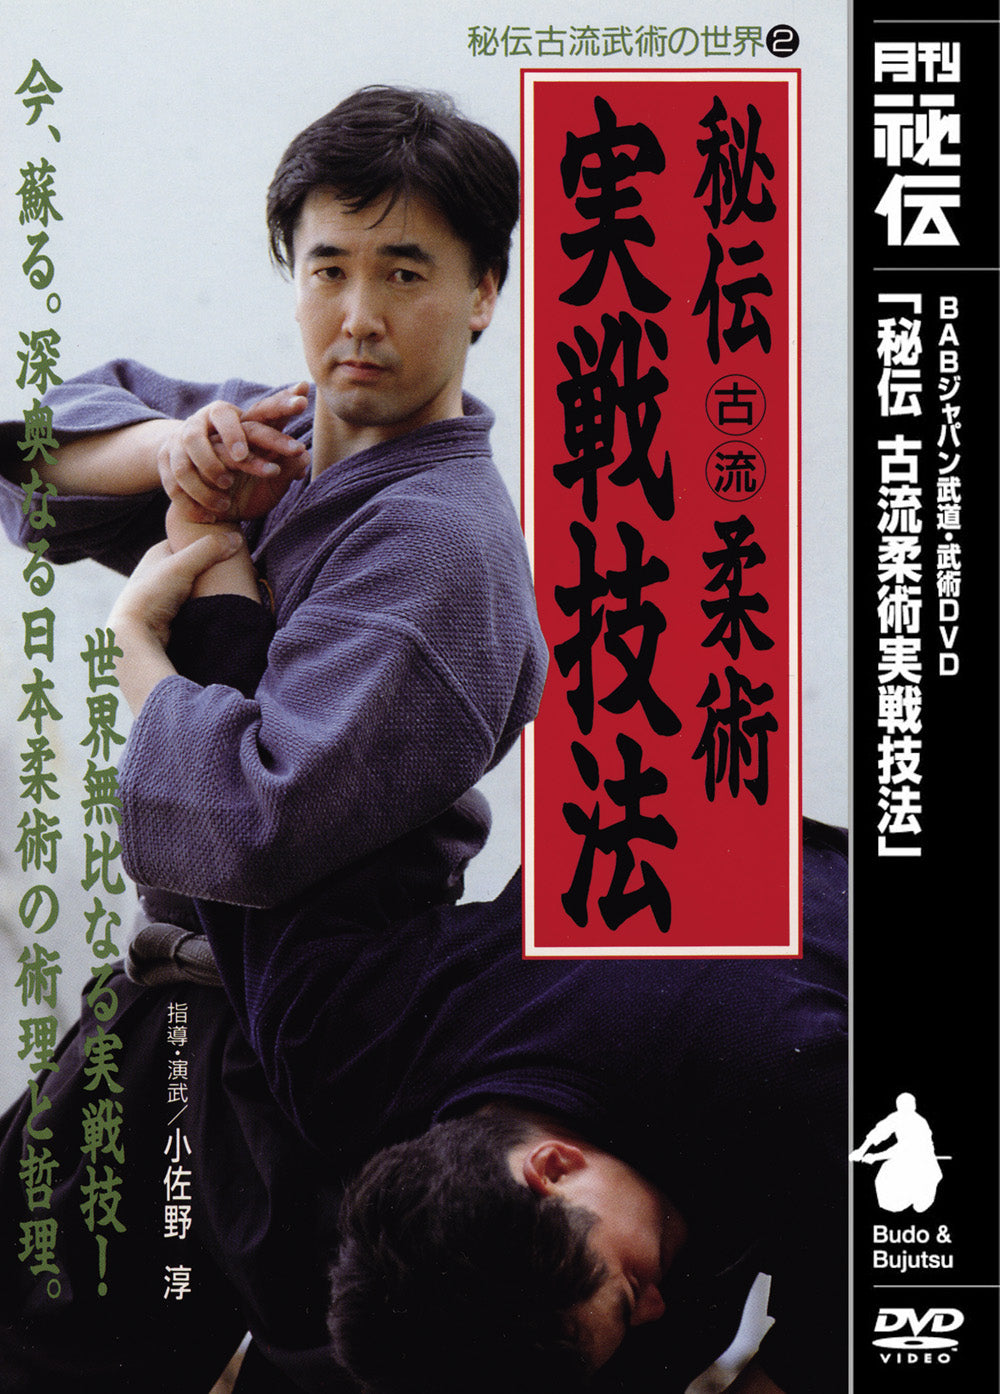 Secret Koryu Jujutsu Techniques DVD 3 by Jun Osano